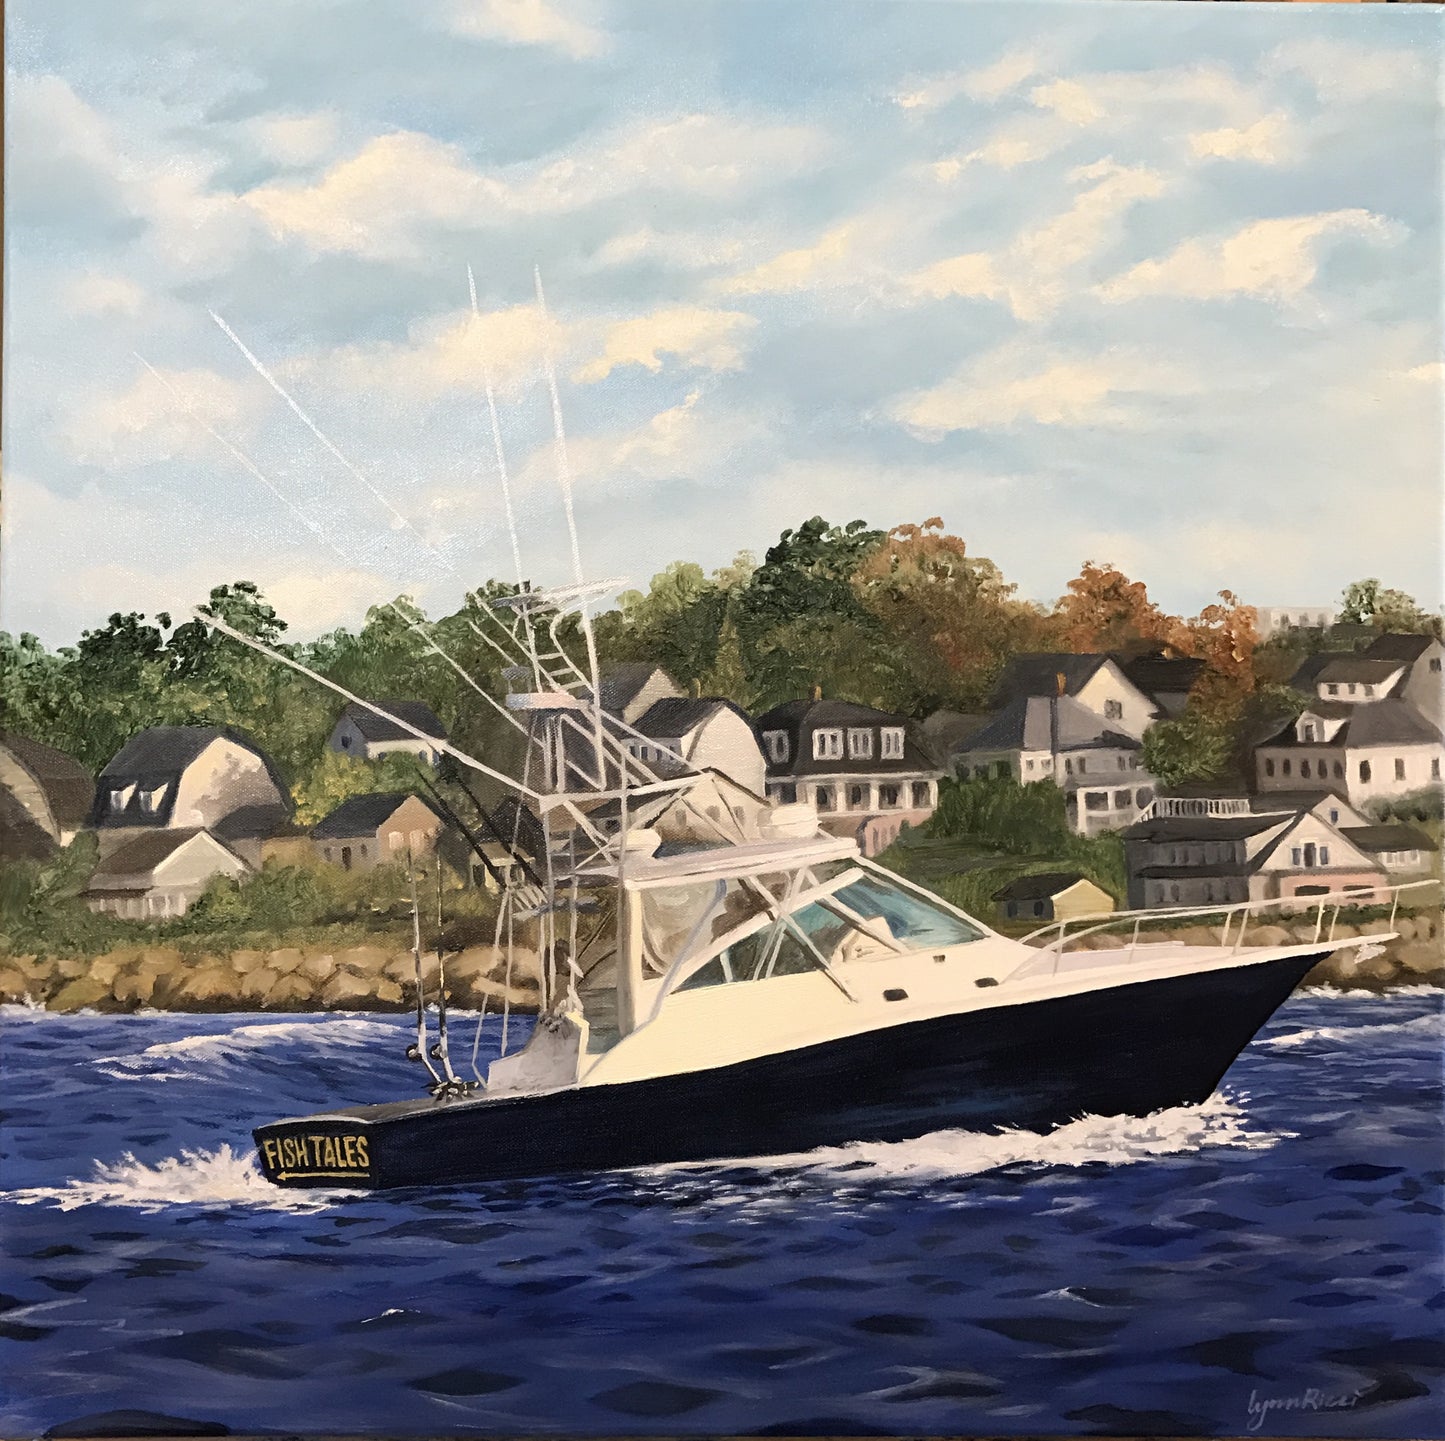 Fran's boat - Commissioned - Artwork of Lynn Ricci